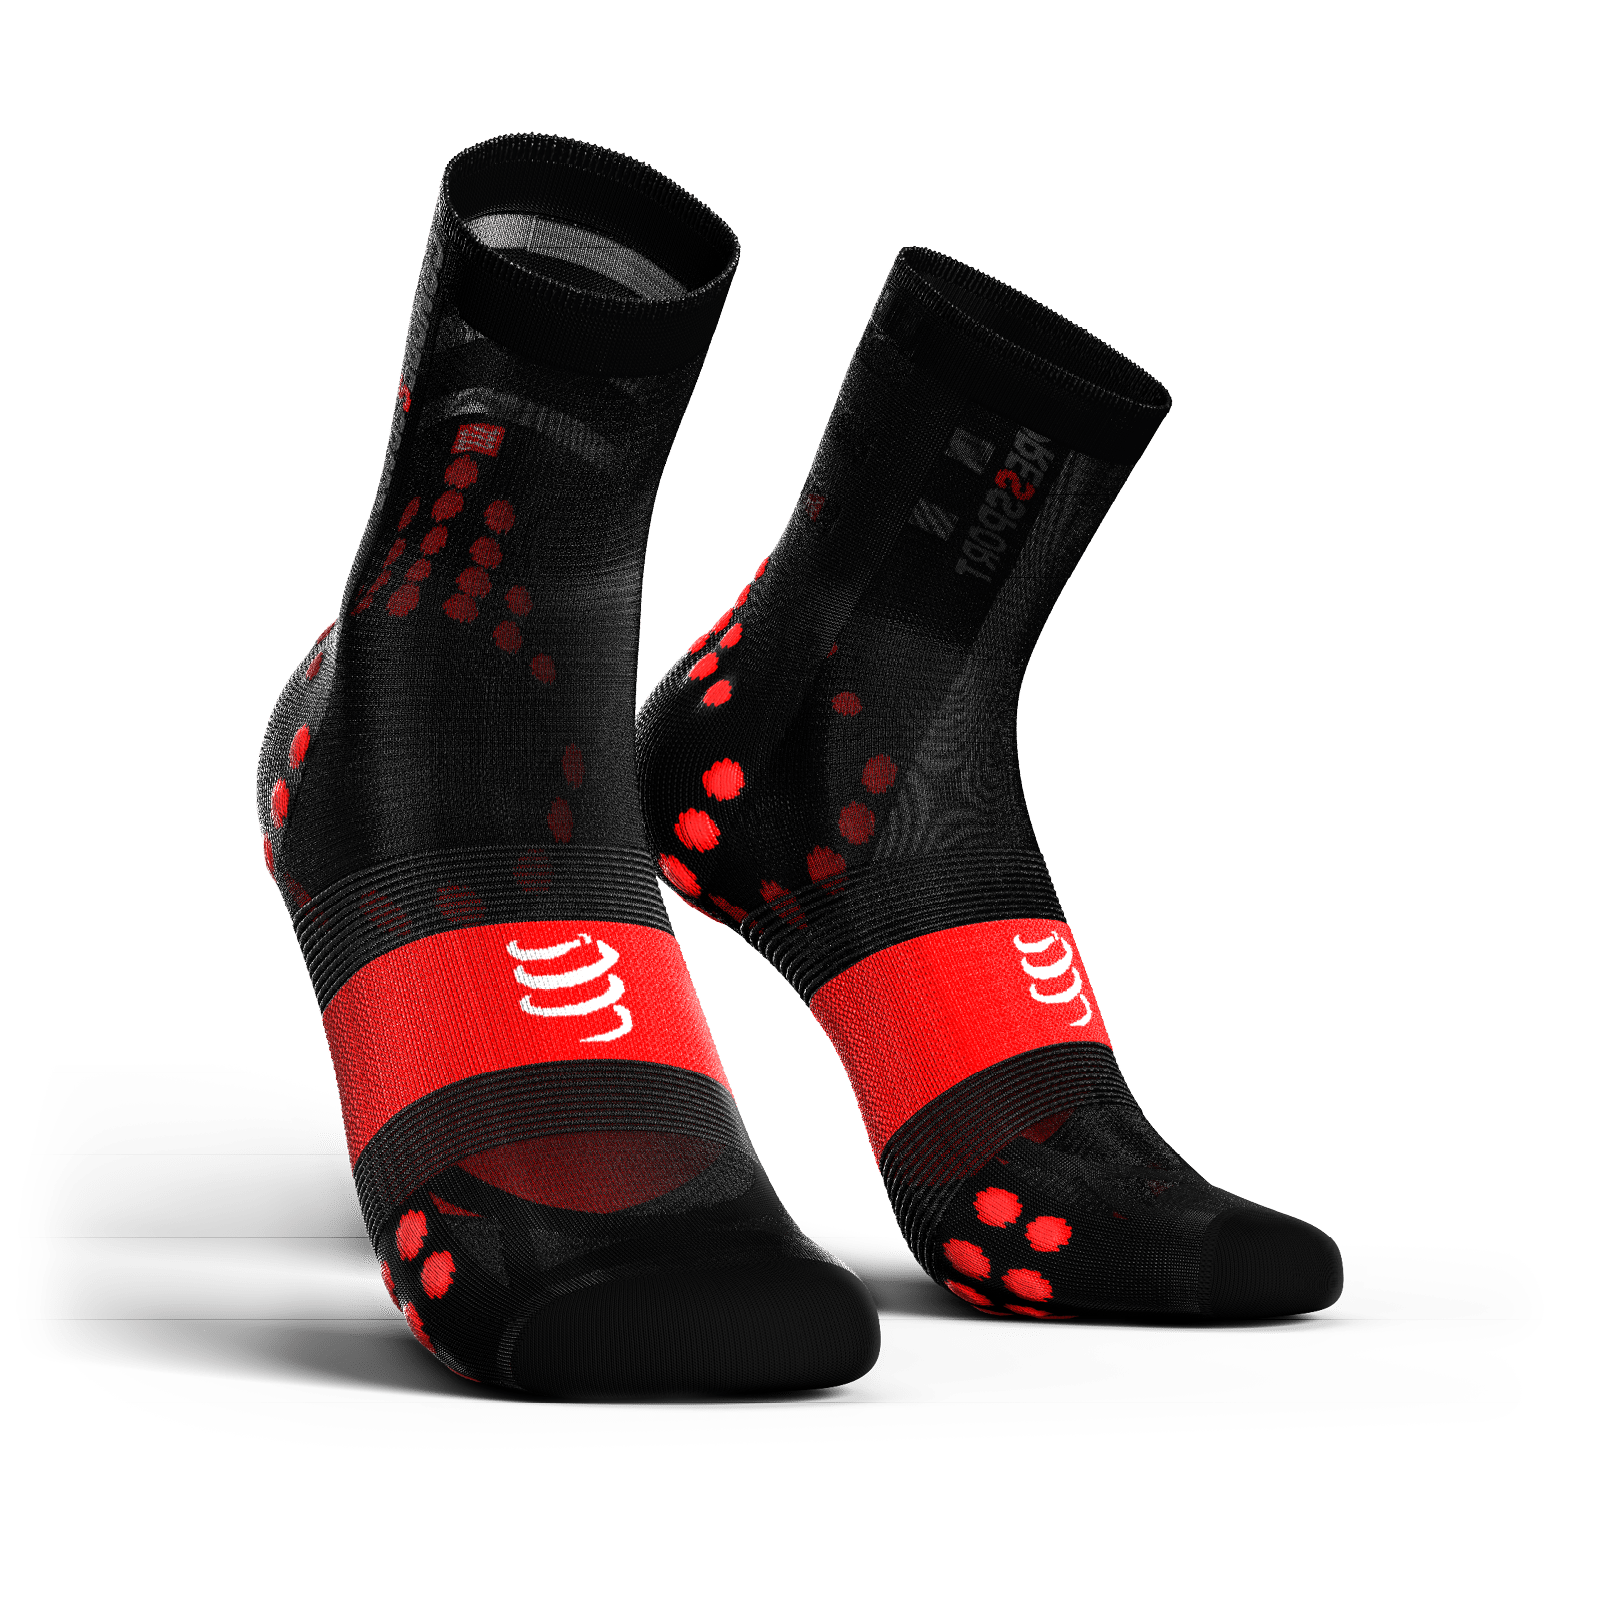 Download Pro Racing Socks 3.0 Ultralight Bike Compressport - ON AND ...